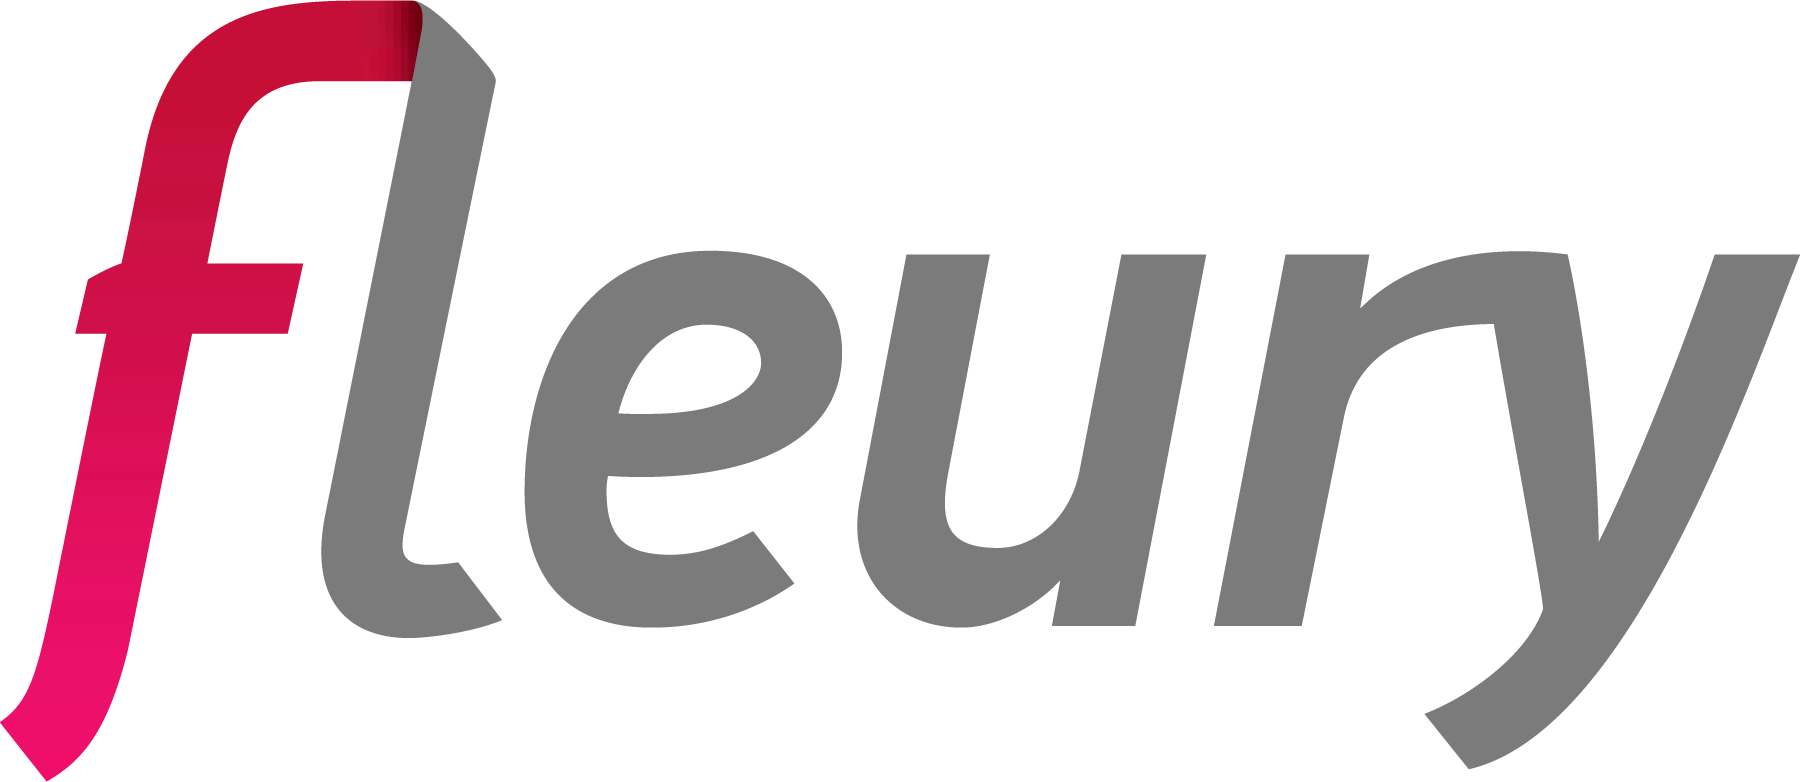 logo-fleury-2048.png